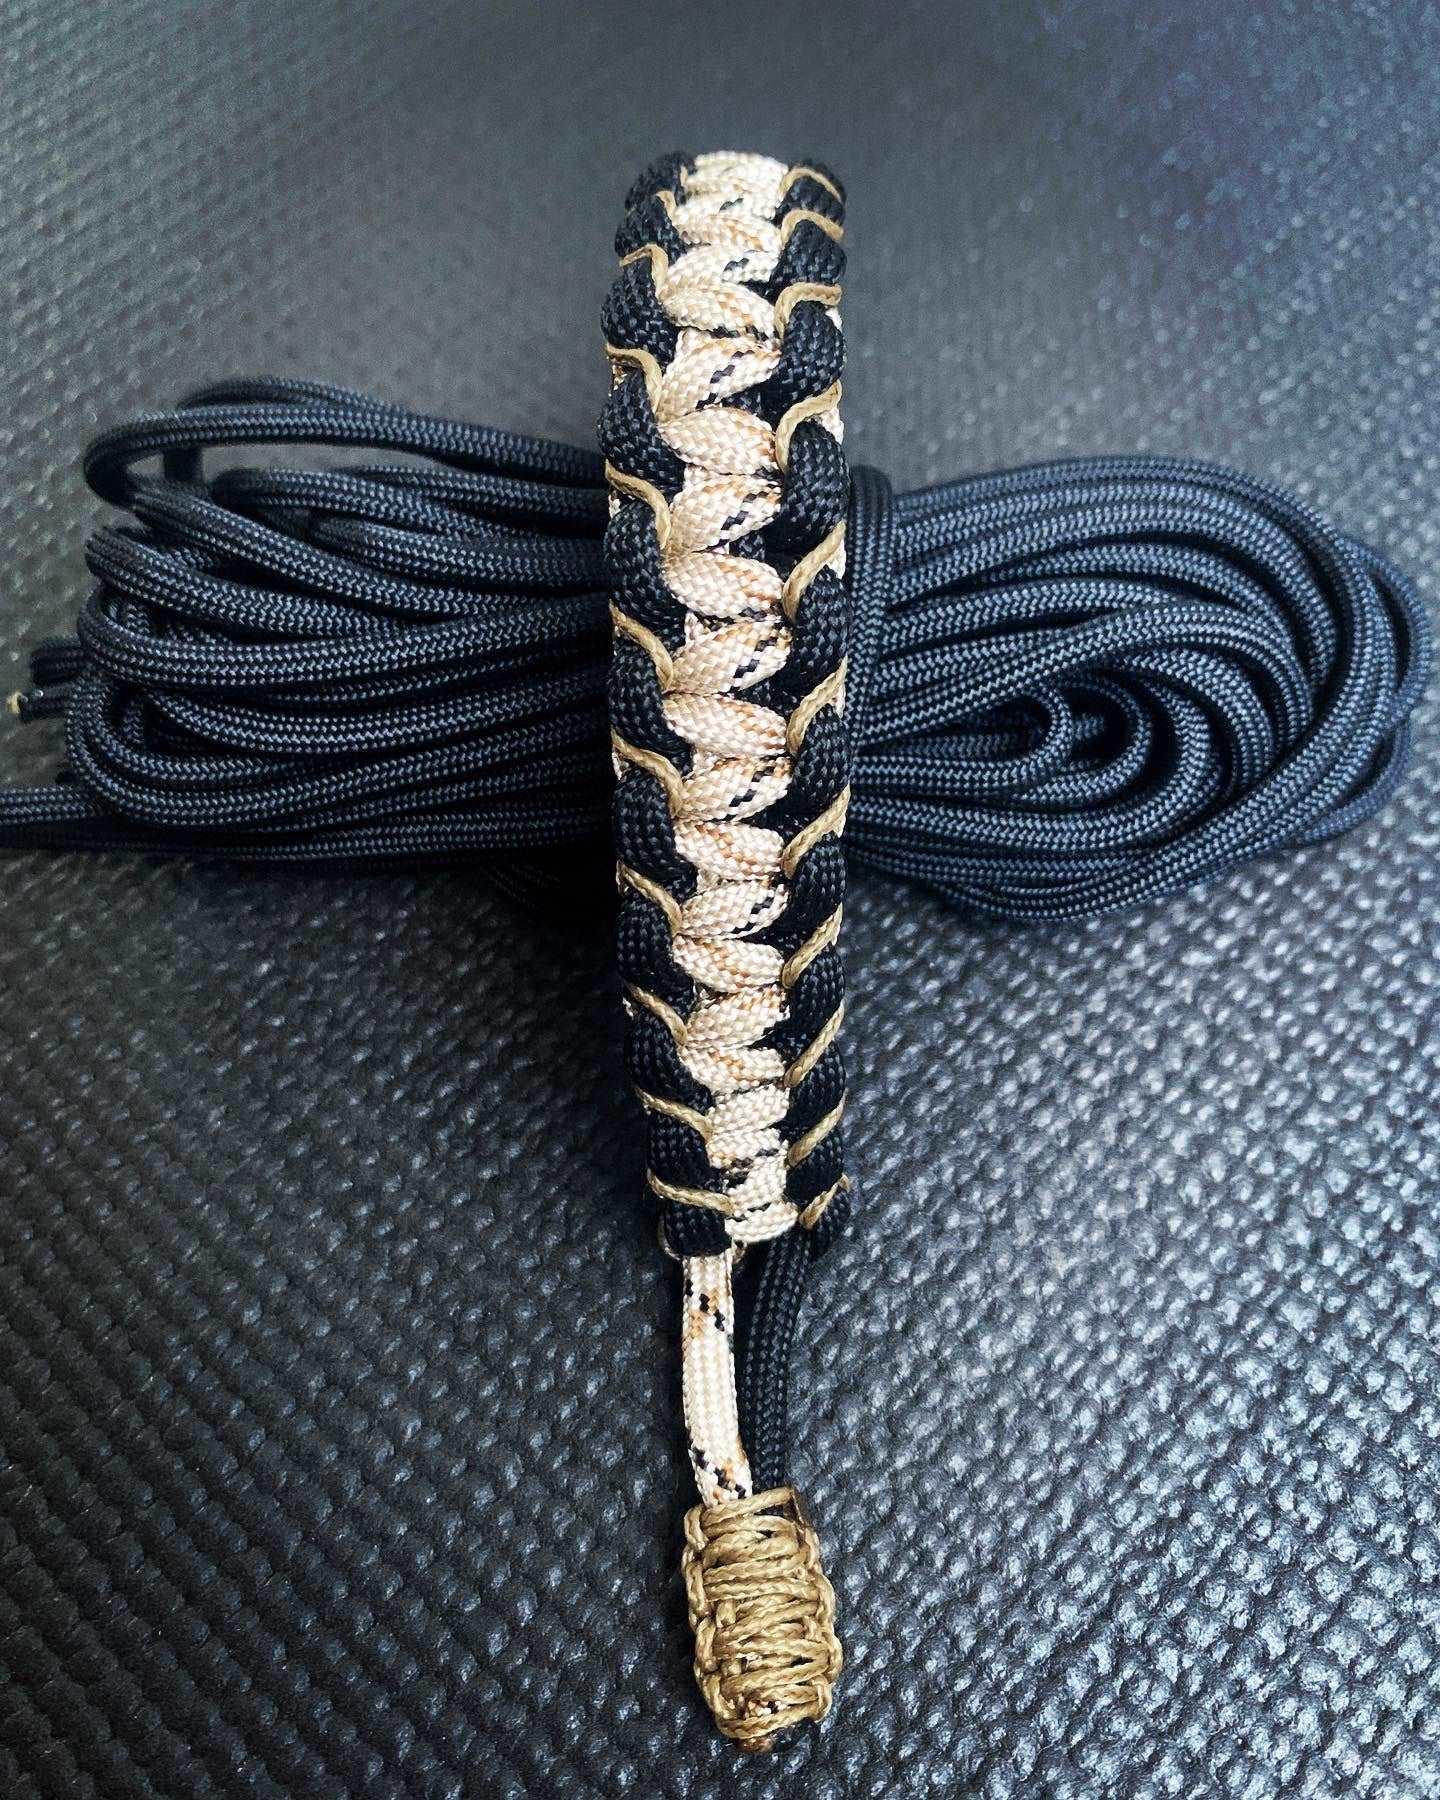 The Zipper Knot Survival Paracord Bracelet - Micro Cord Stitched